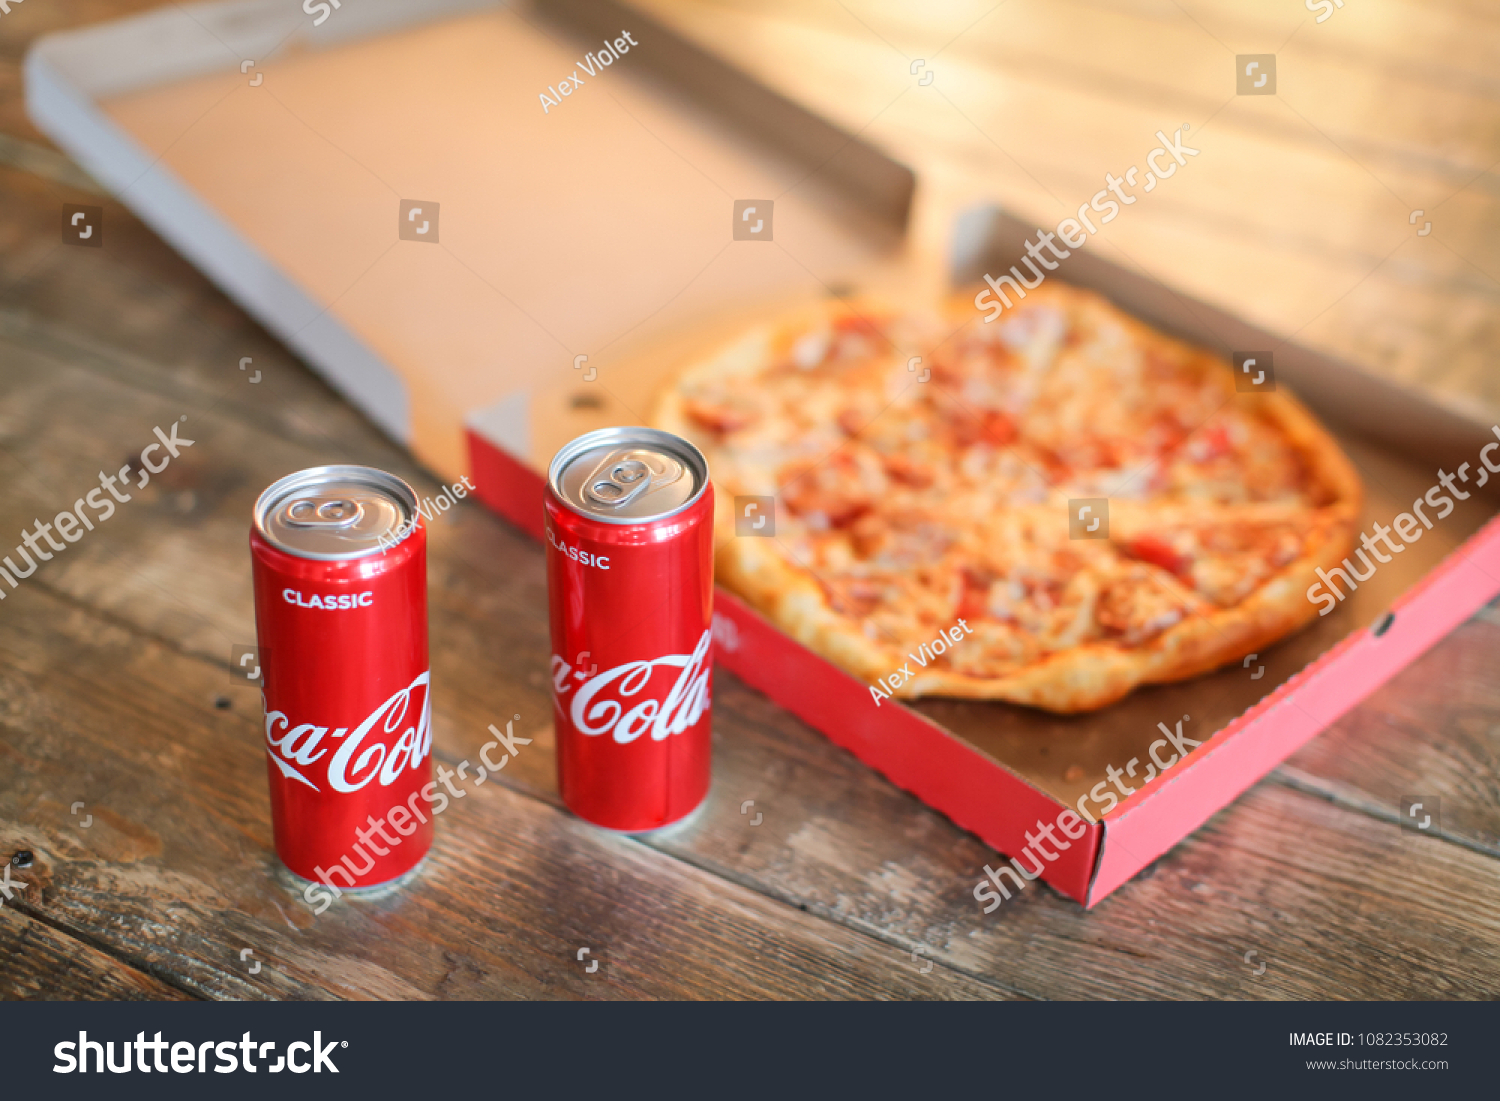 фотосессия с пиццей и колой фото 10